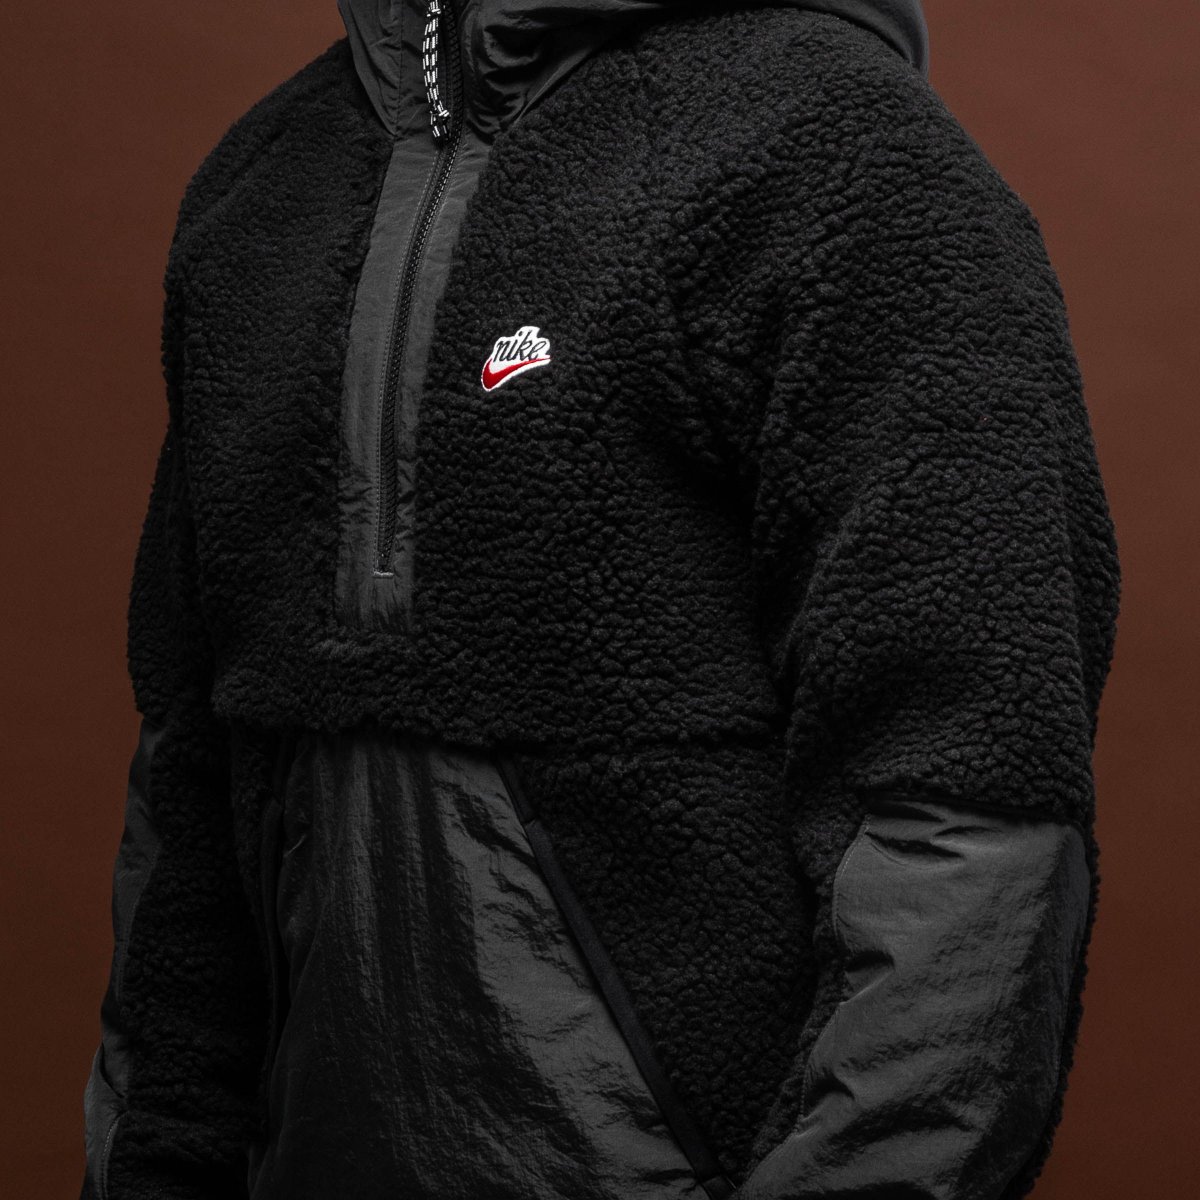 escena Ondas Avenida Titolo on Twitter: "softest Sherpa fleece will keep you warm. Nike  Sportswear Winter Fleece Anorak Shop Yours NOW ➡️ https://t.co/MC1iWrQJDD  xsmall to large.⁠ style code 🔎 BV3766-010 #nike #nikesportswear  #winterjacket #fleece #sherpa ⁠